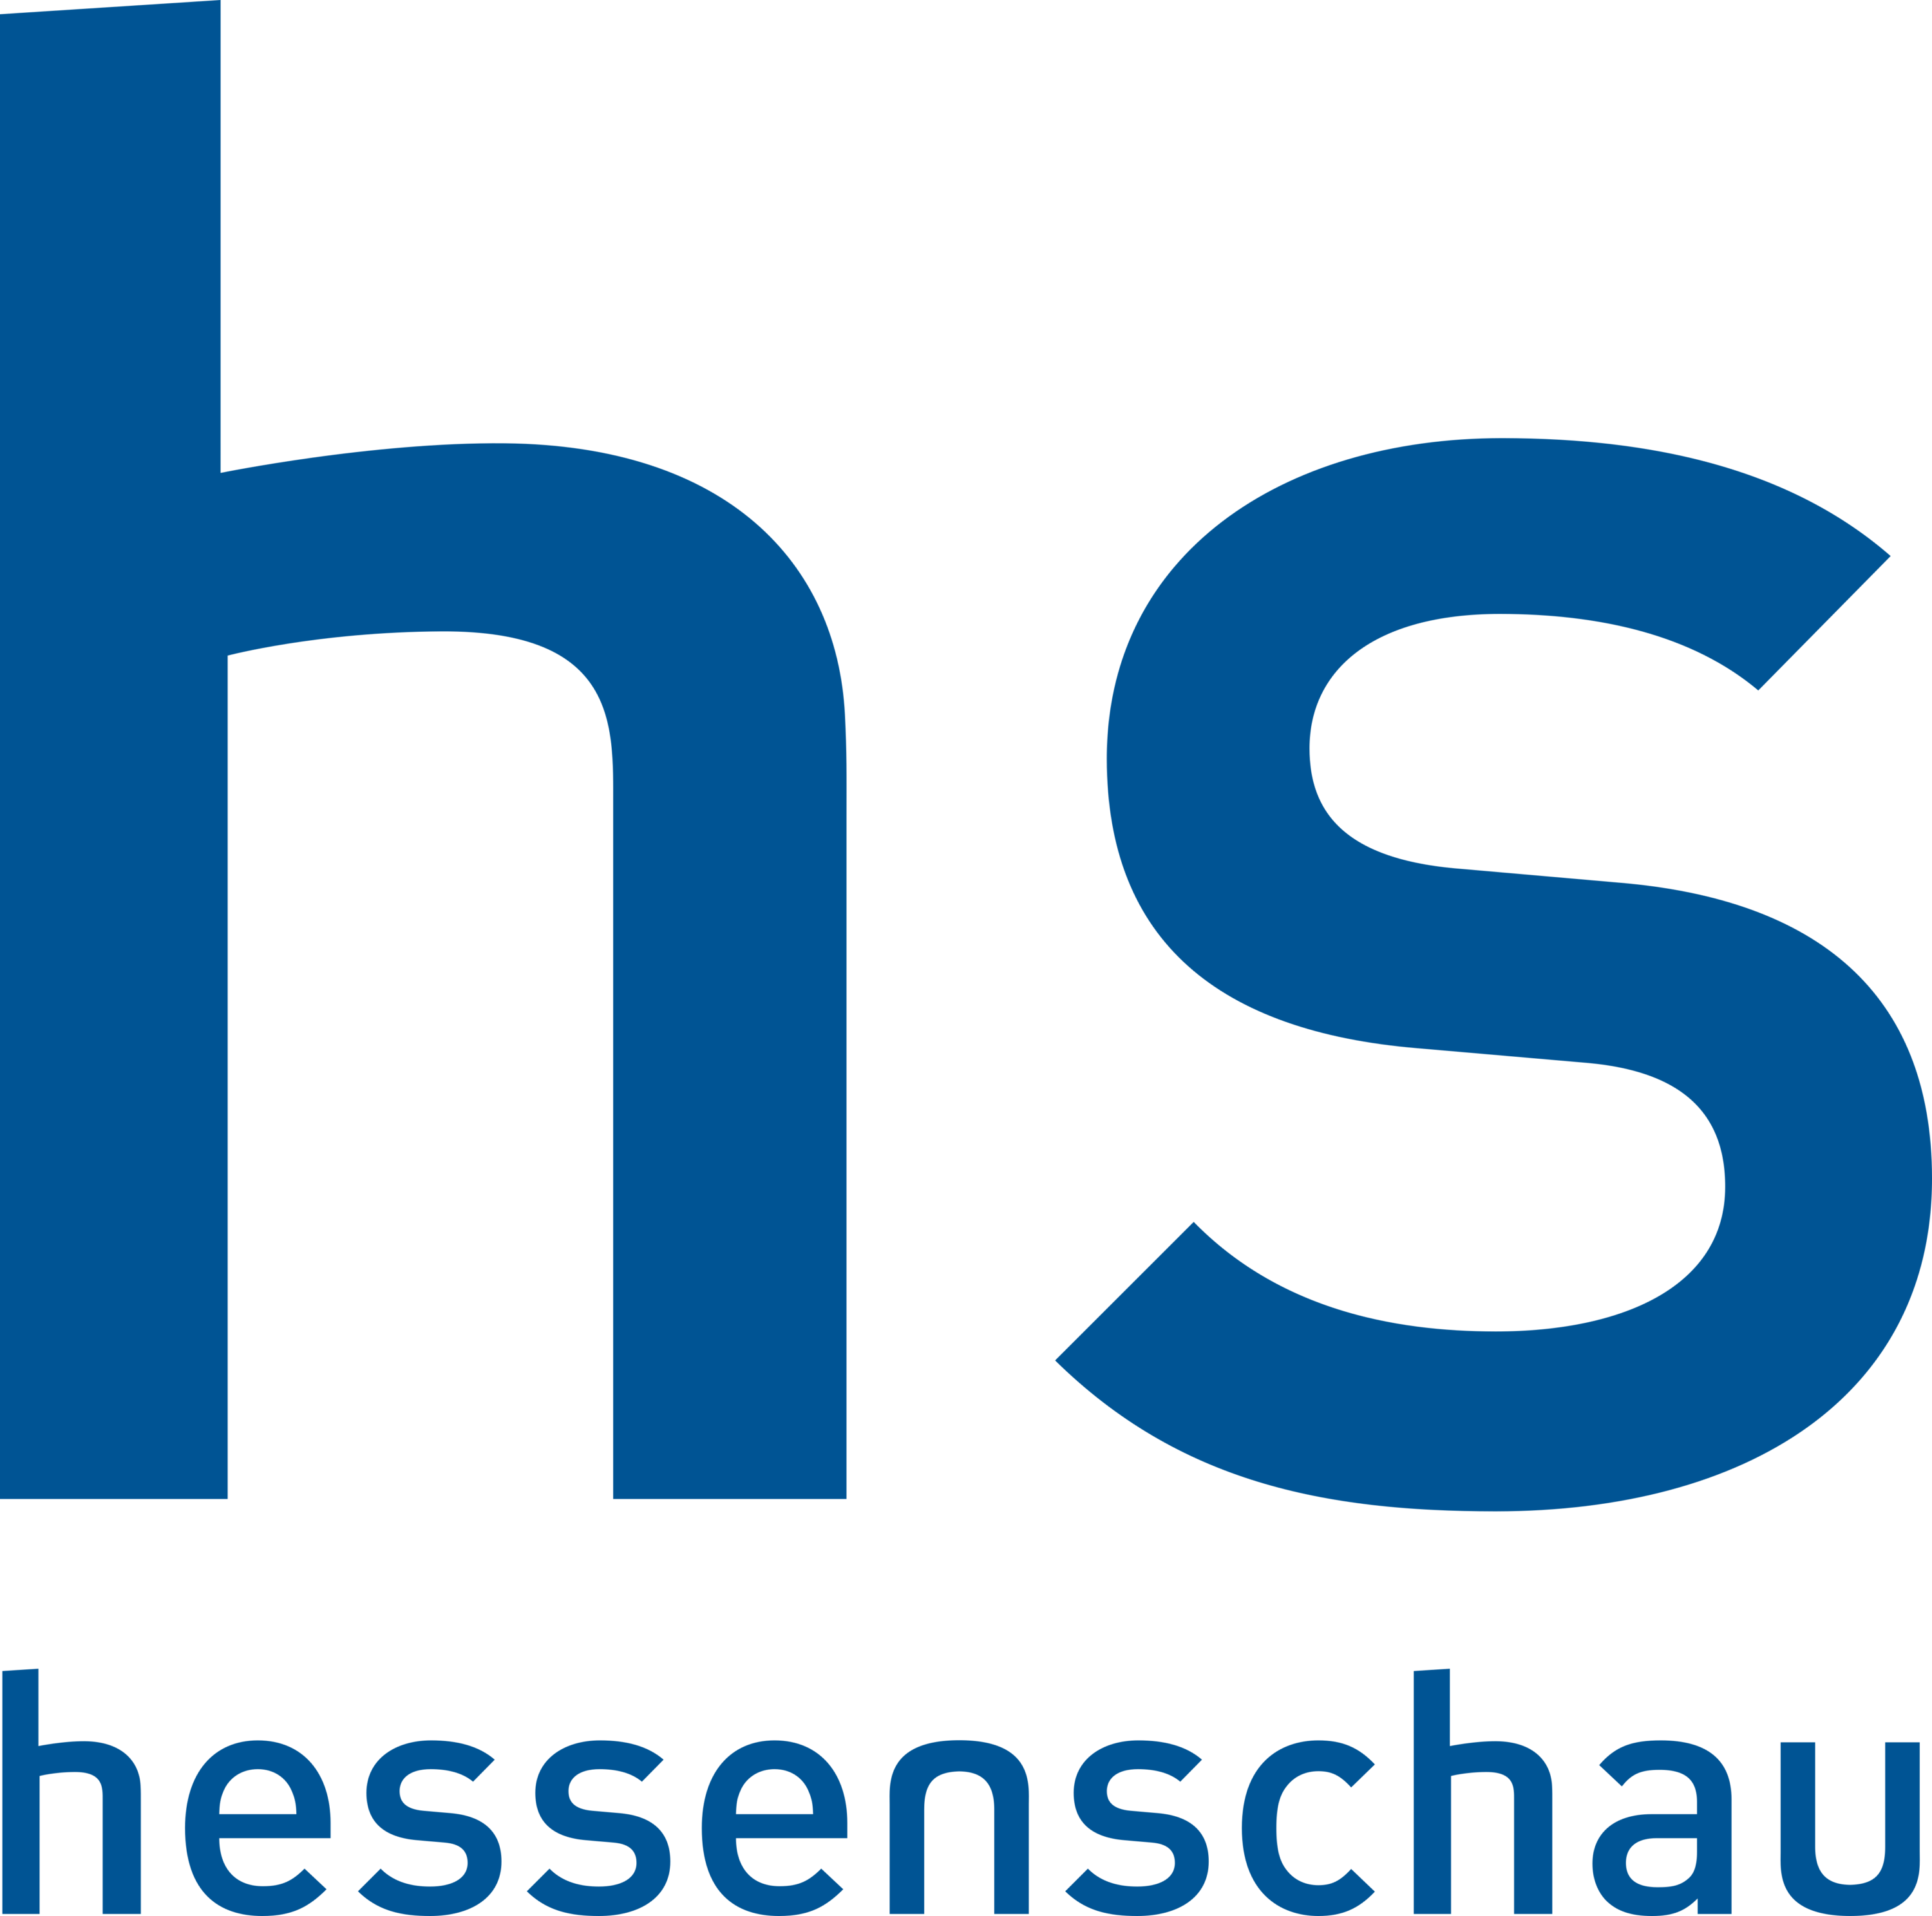 Hessenschau Logo icon blue text